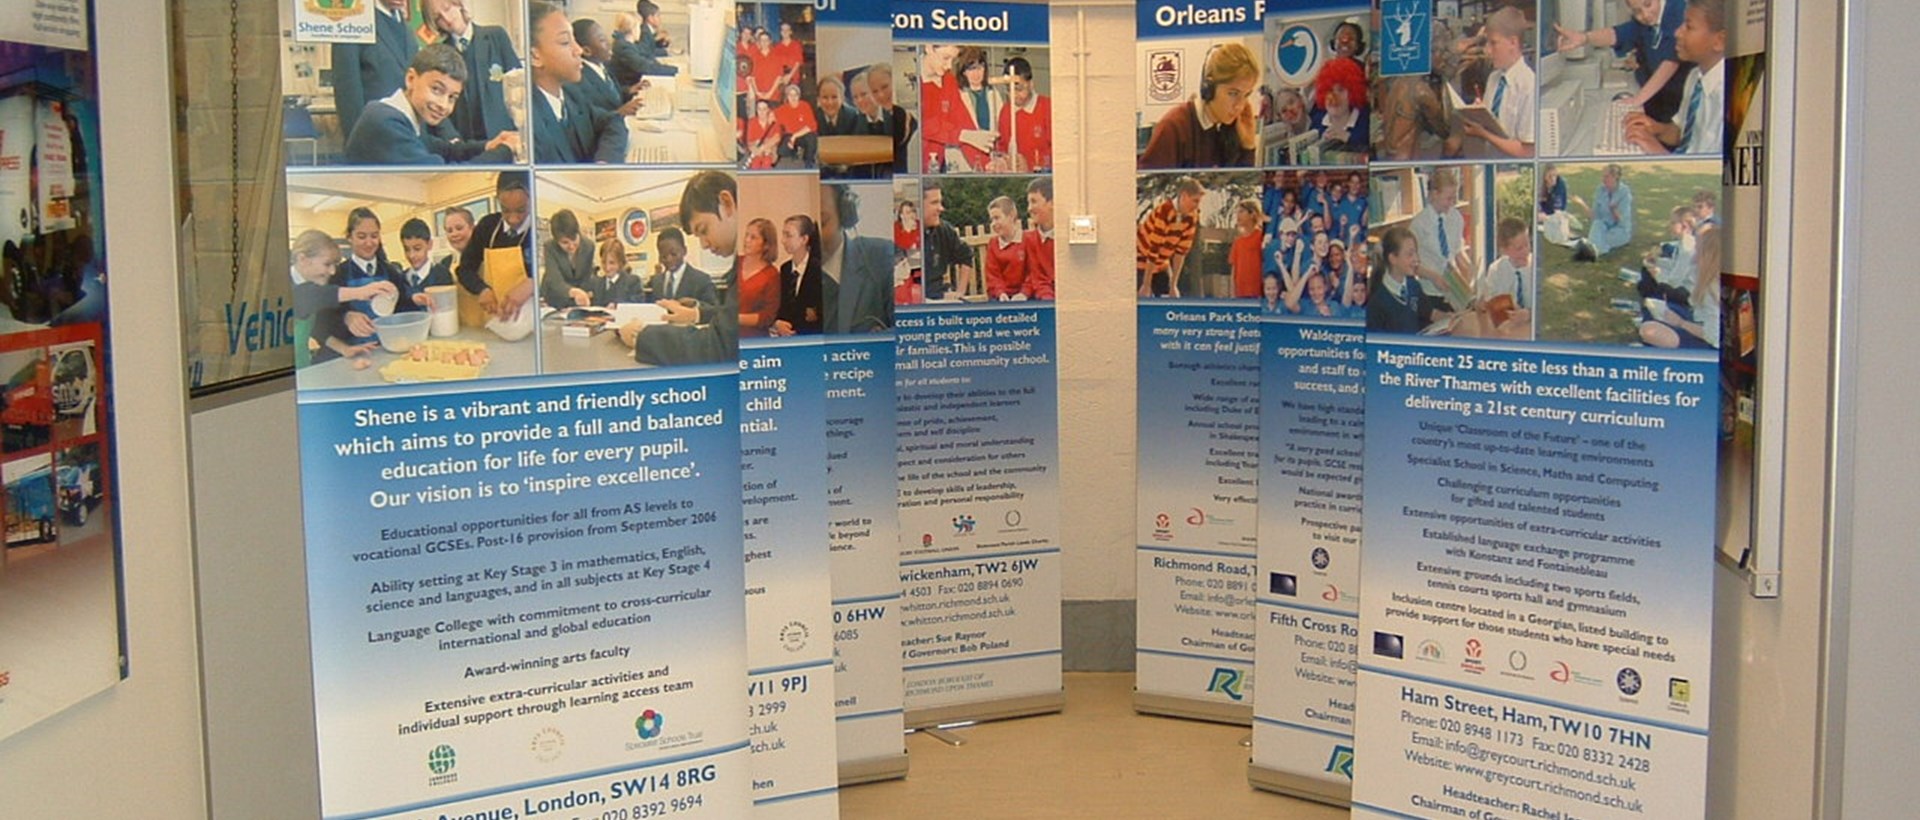 Shene School Education & Schools Exhibition Stands & Displays Pop Up Stands